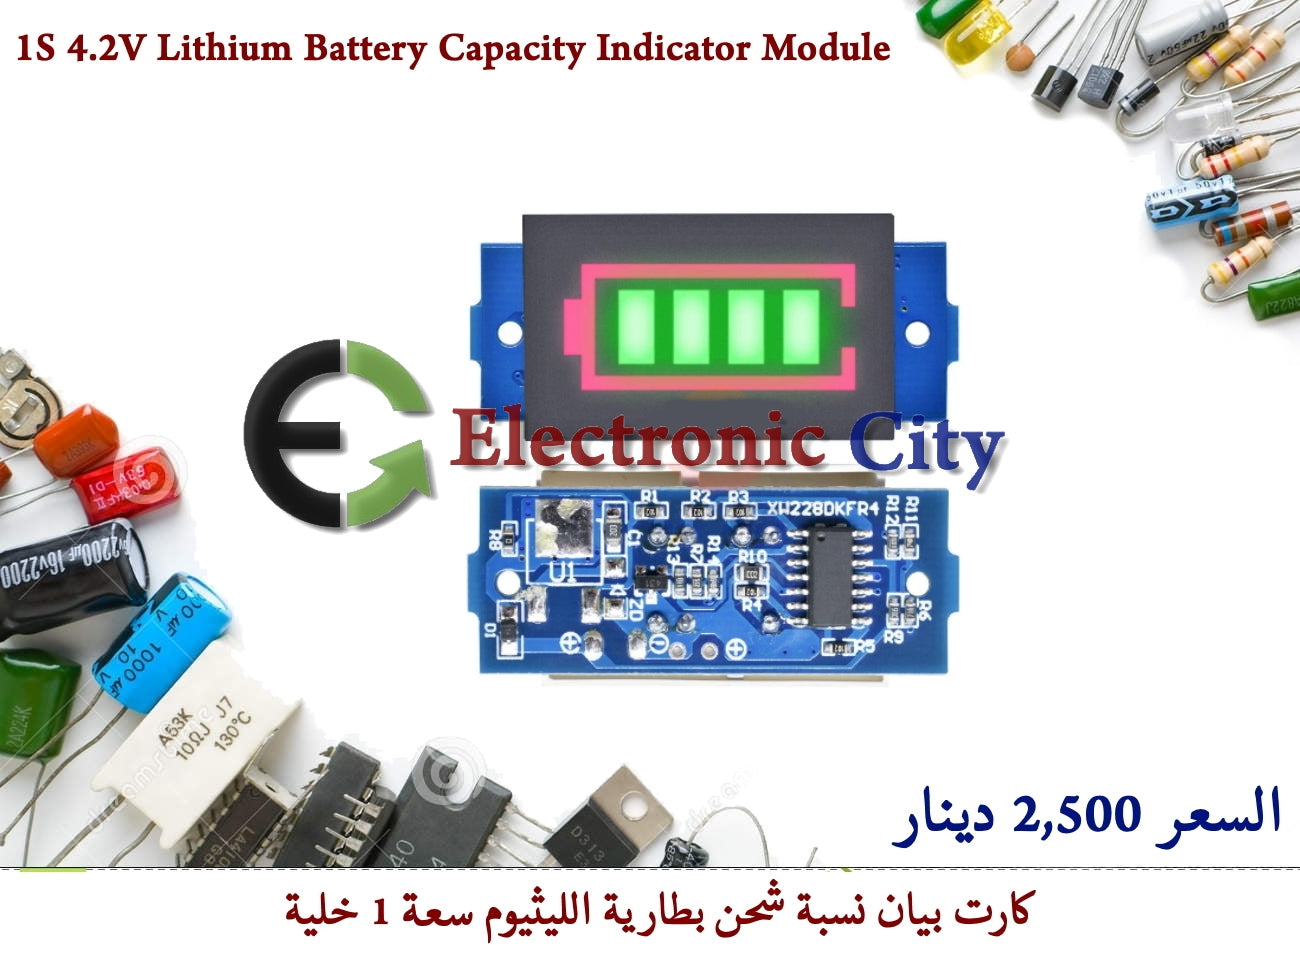 1S 4.2V Lithium Battery Capacity Indicator Module #F3 012313